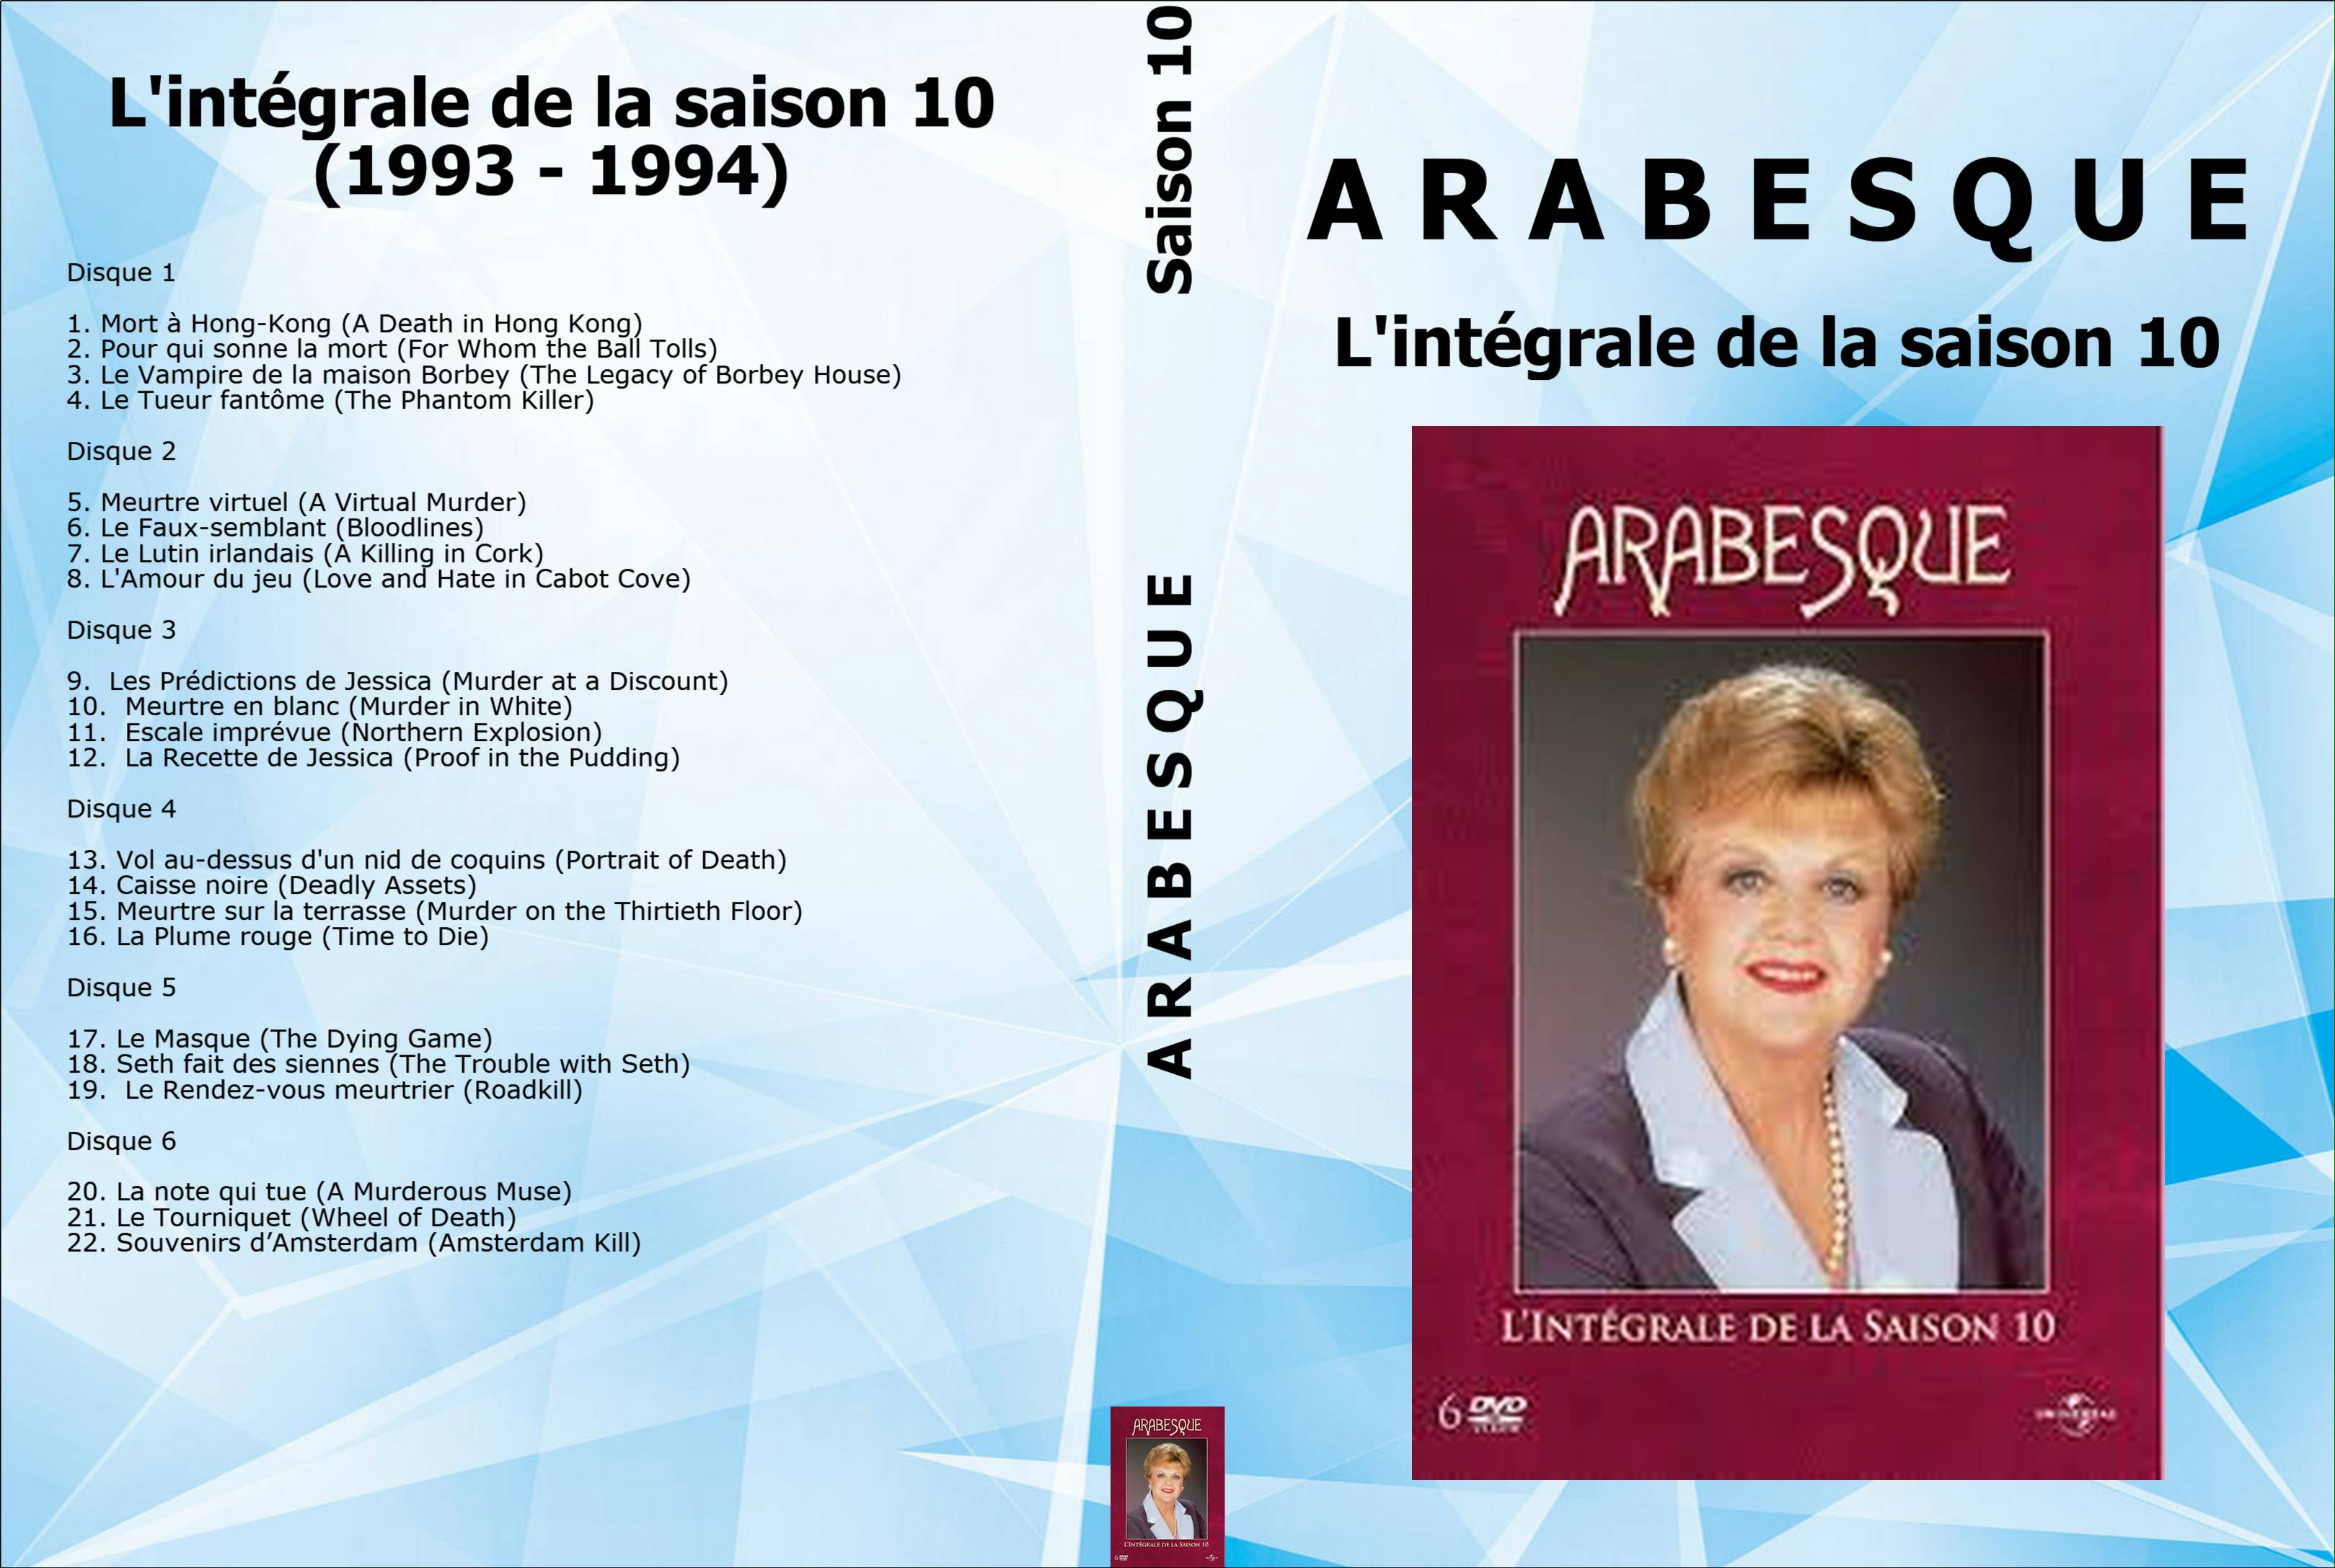 Jaquette DVD Arabesque saison 10 custom